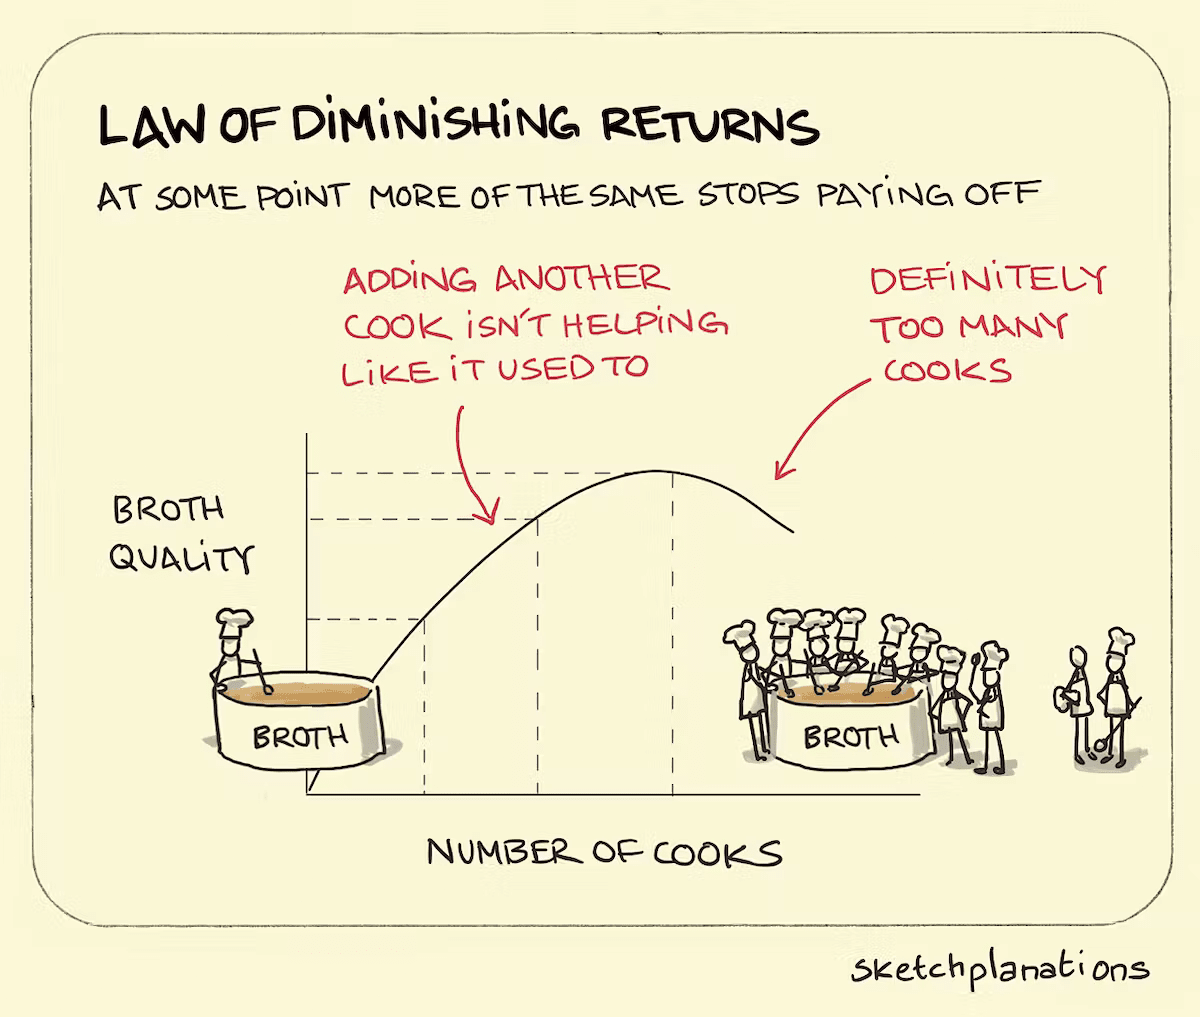 The law of diminishing returns